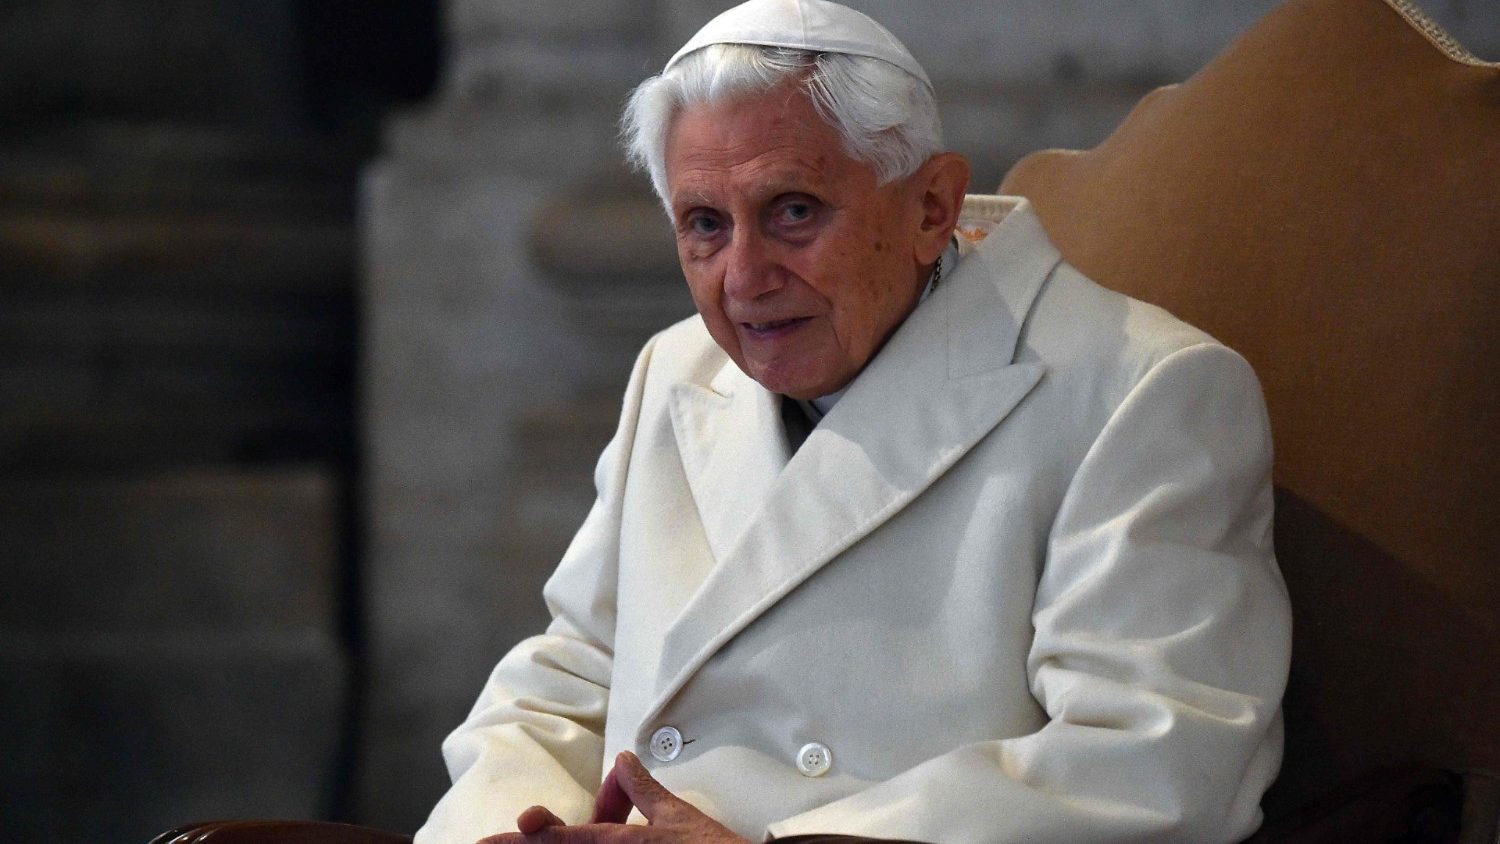 Pope Emeritus Benedict XVI: “There are no two popes”